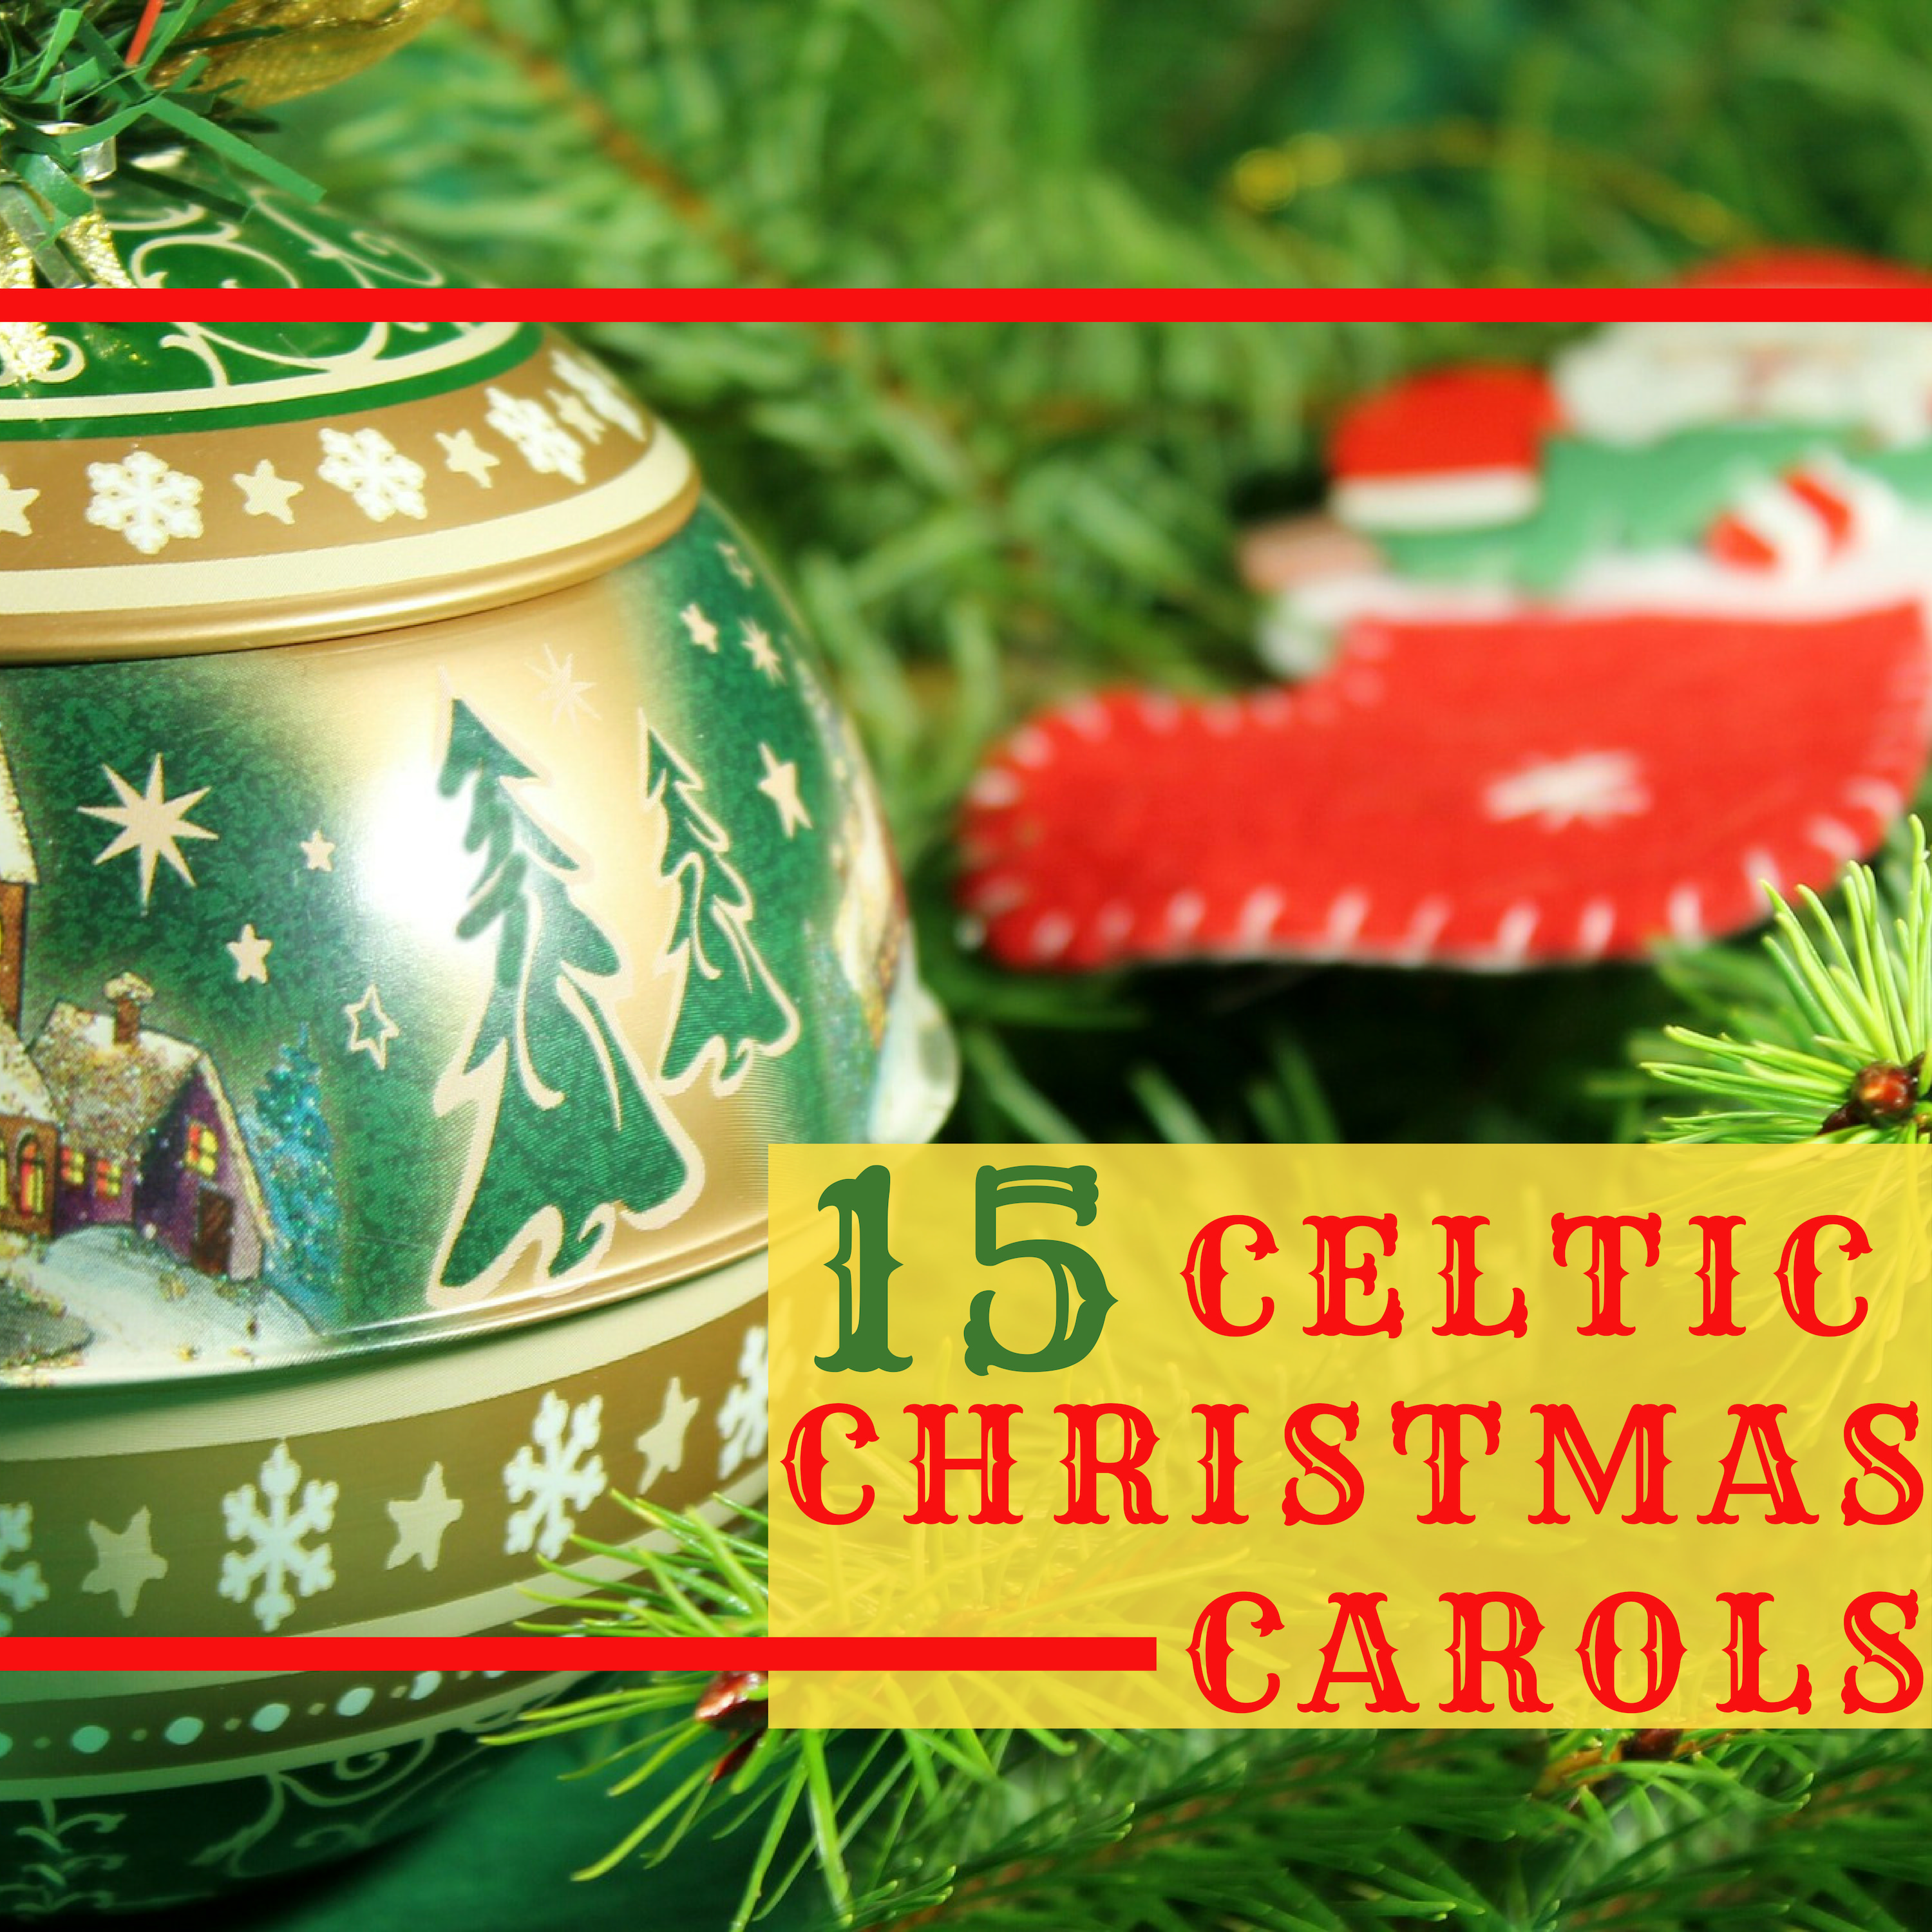 15 Celtic Christmas Carols - Winter Carol Collection, Magical Harp Peaceful Holiday Tracks